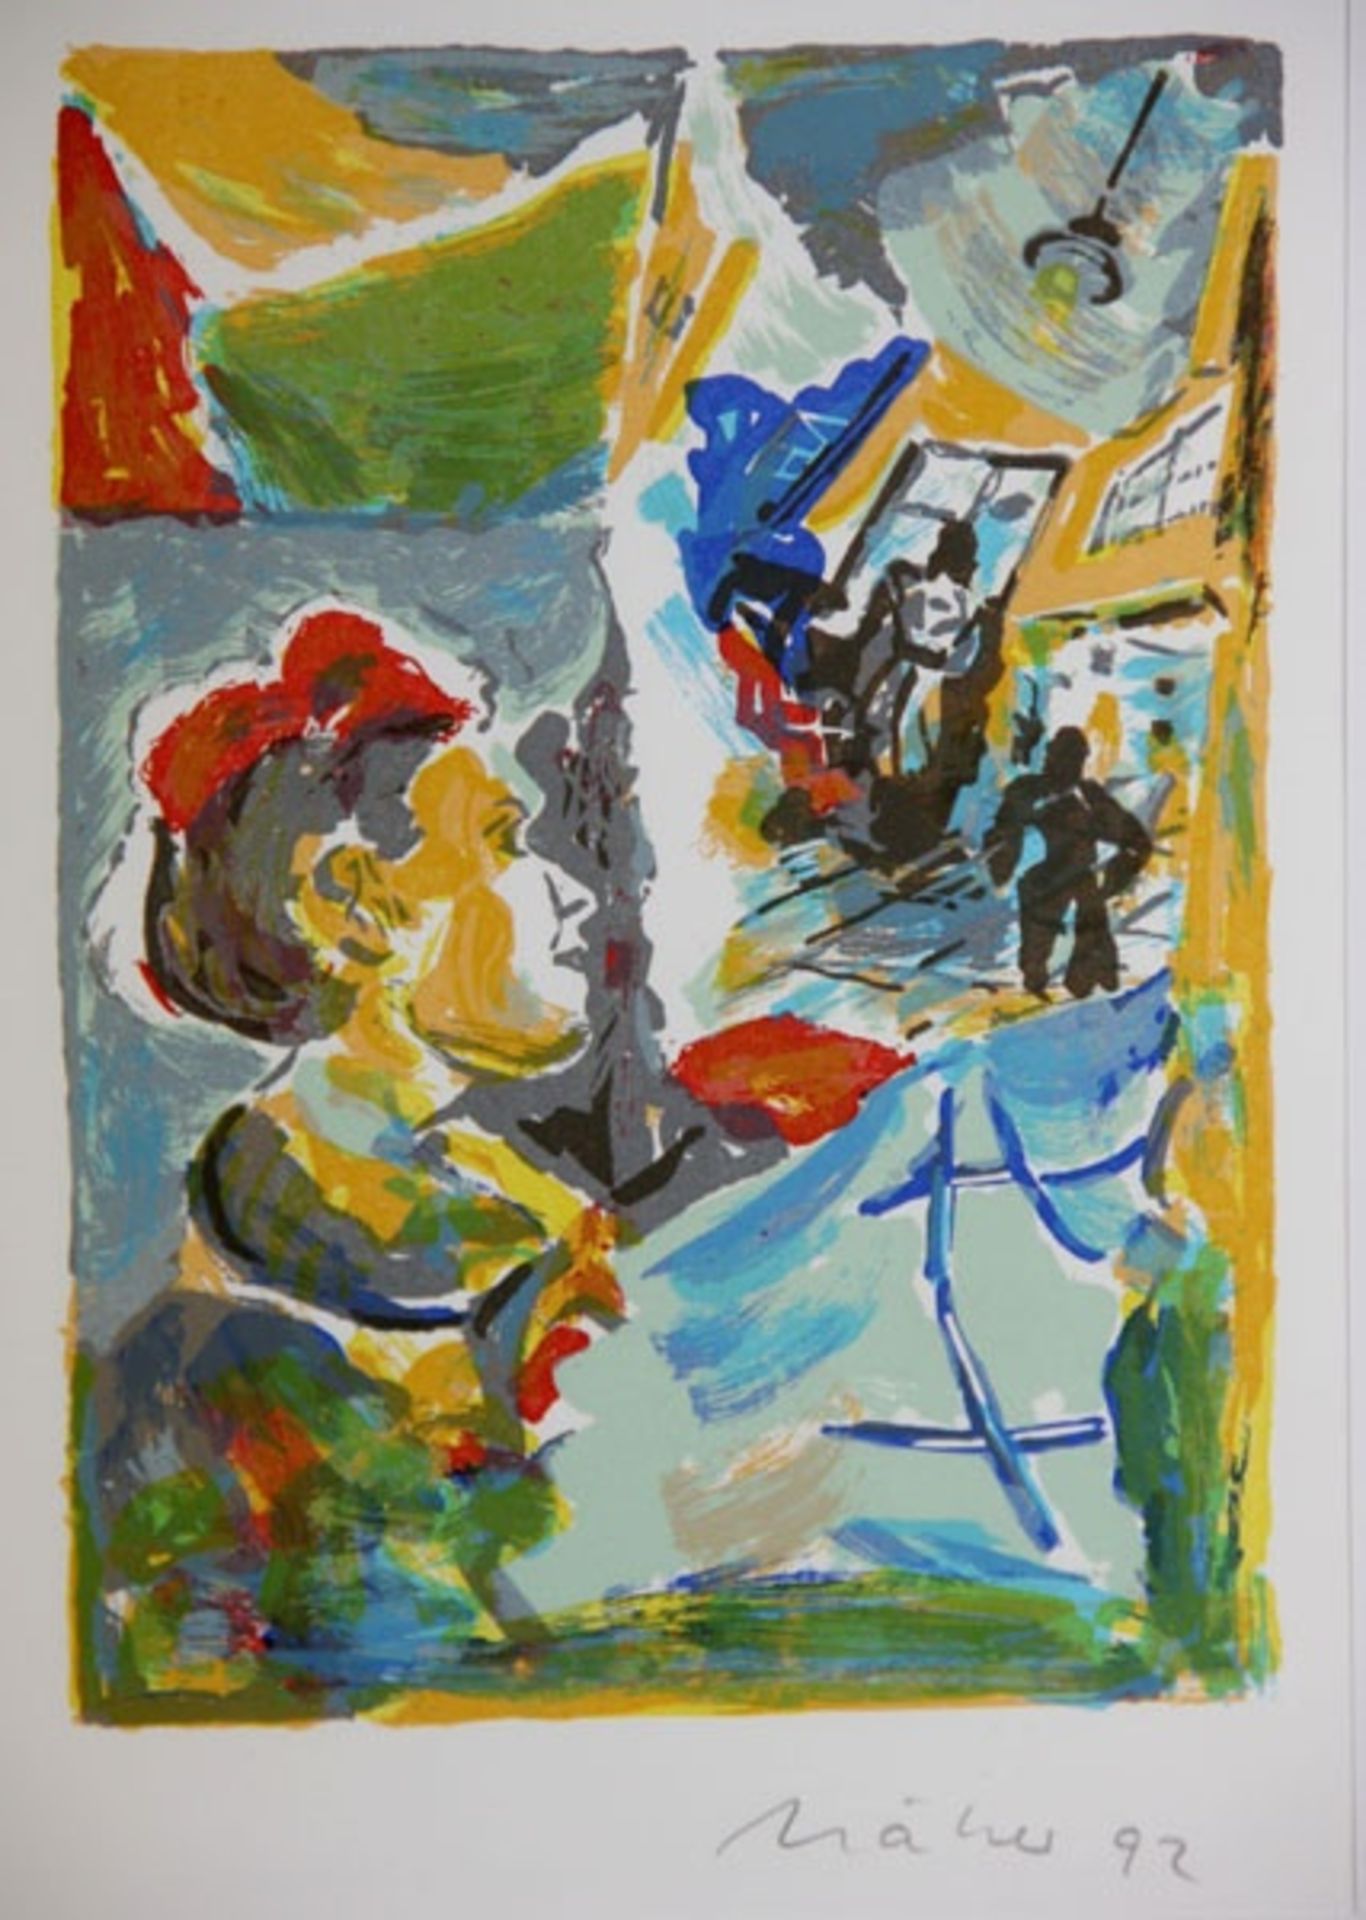 Näher, Max Peter1939-2017, farbiger Handdruck einer Originalgraphik v. Max-Peter Näher, Bü